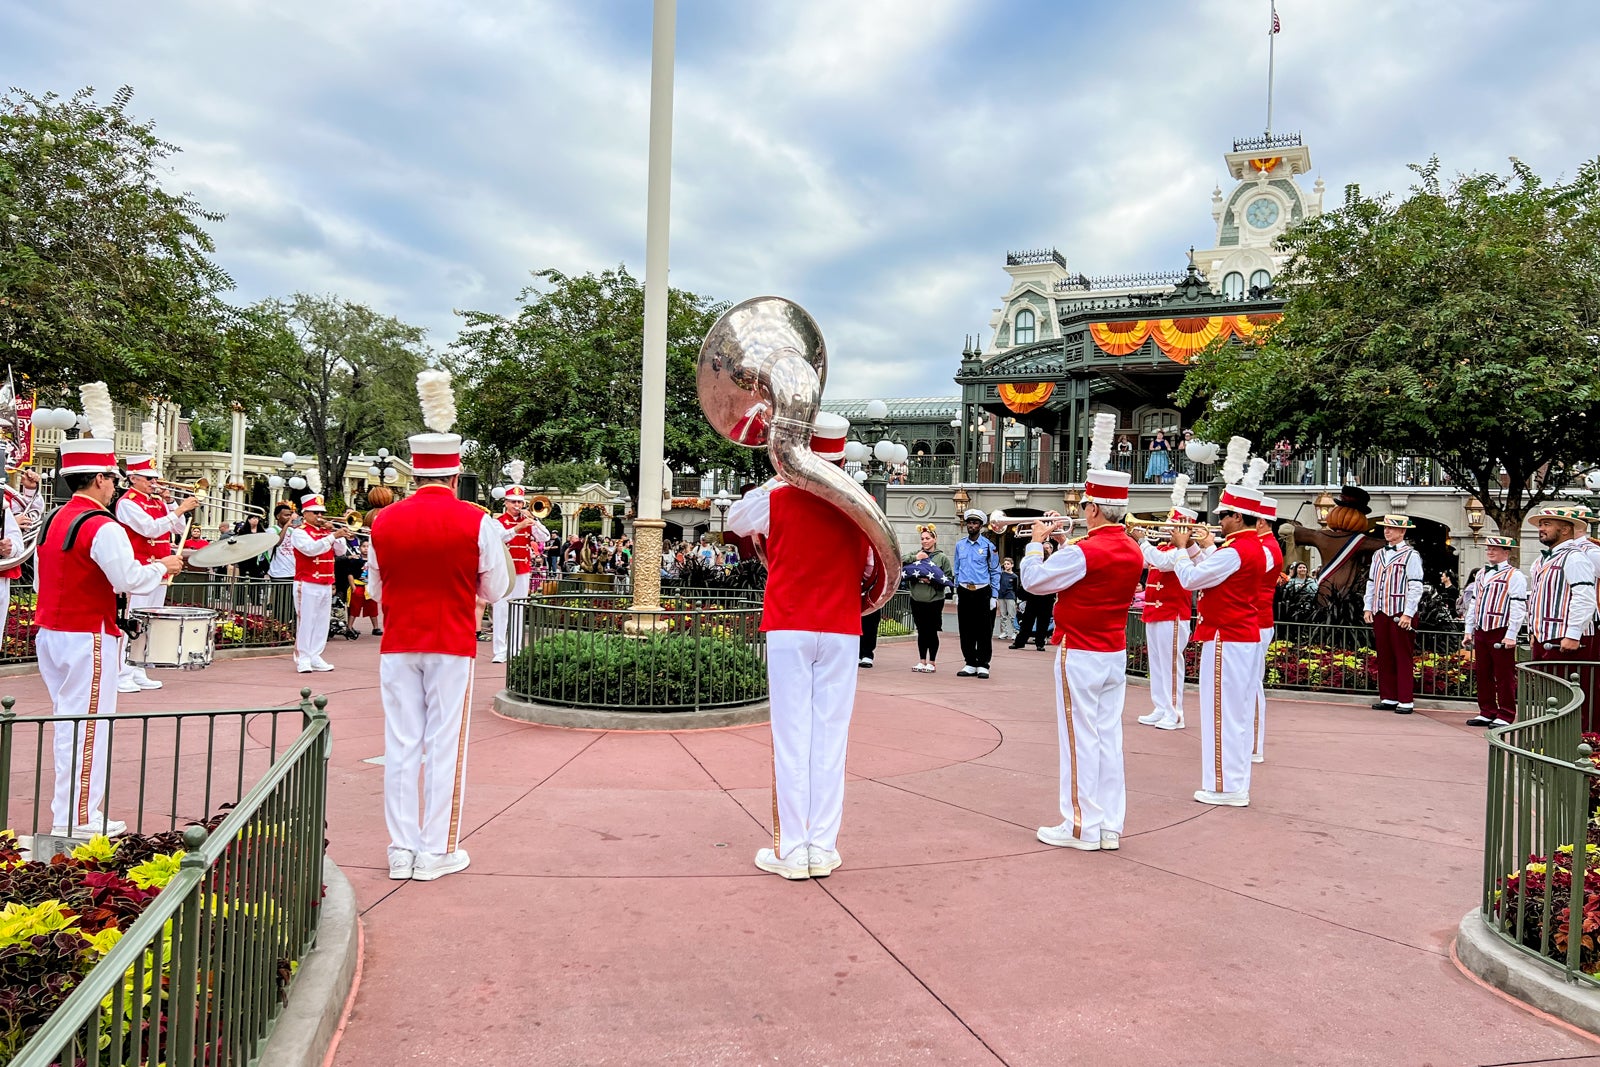 Band plays at Walt Disney World